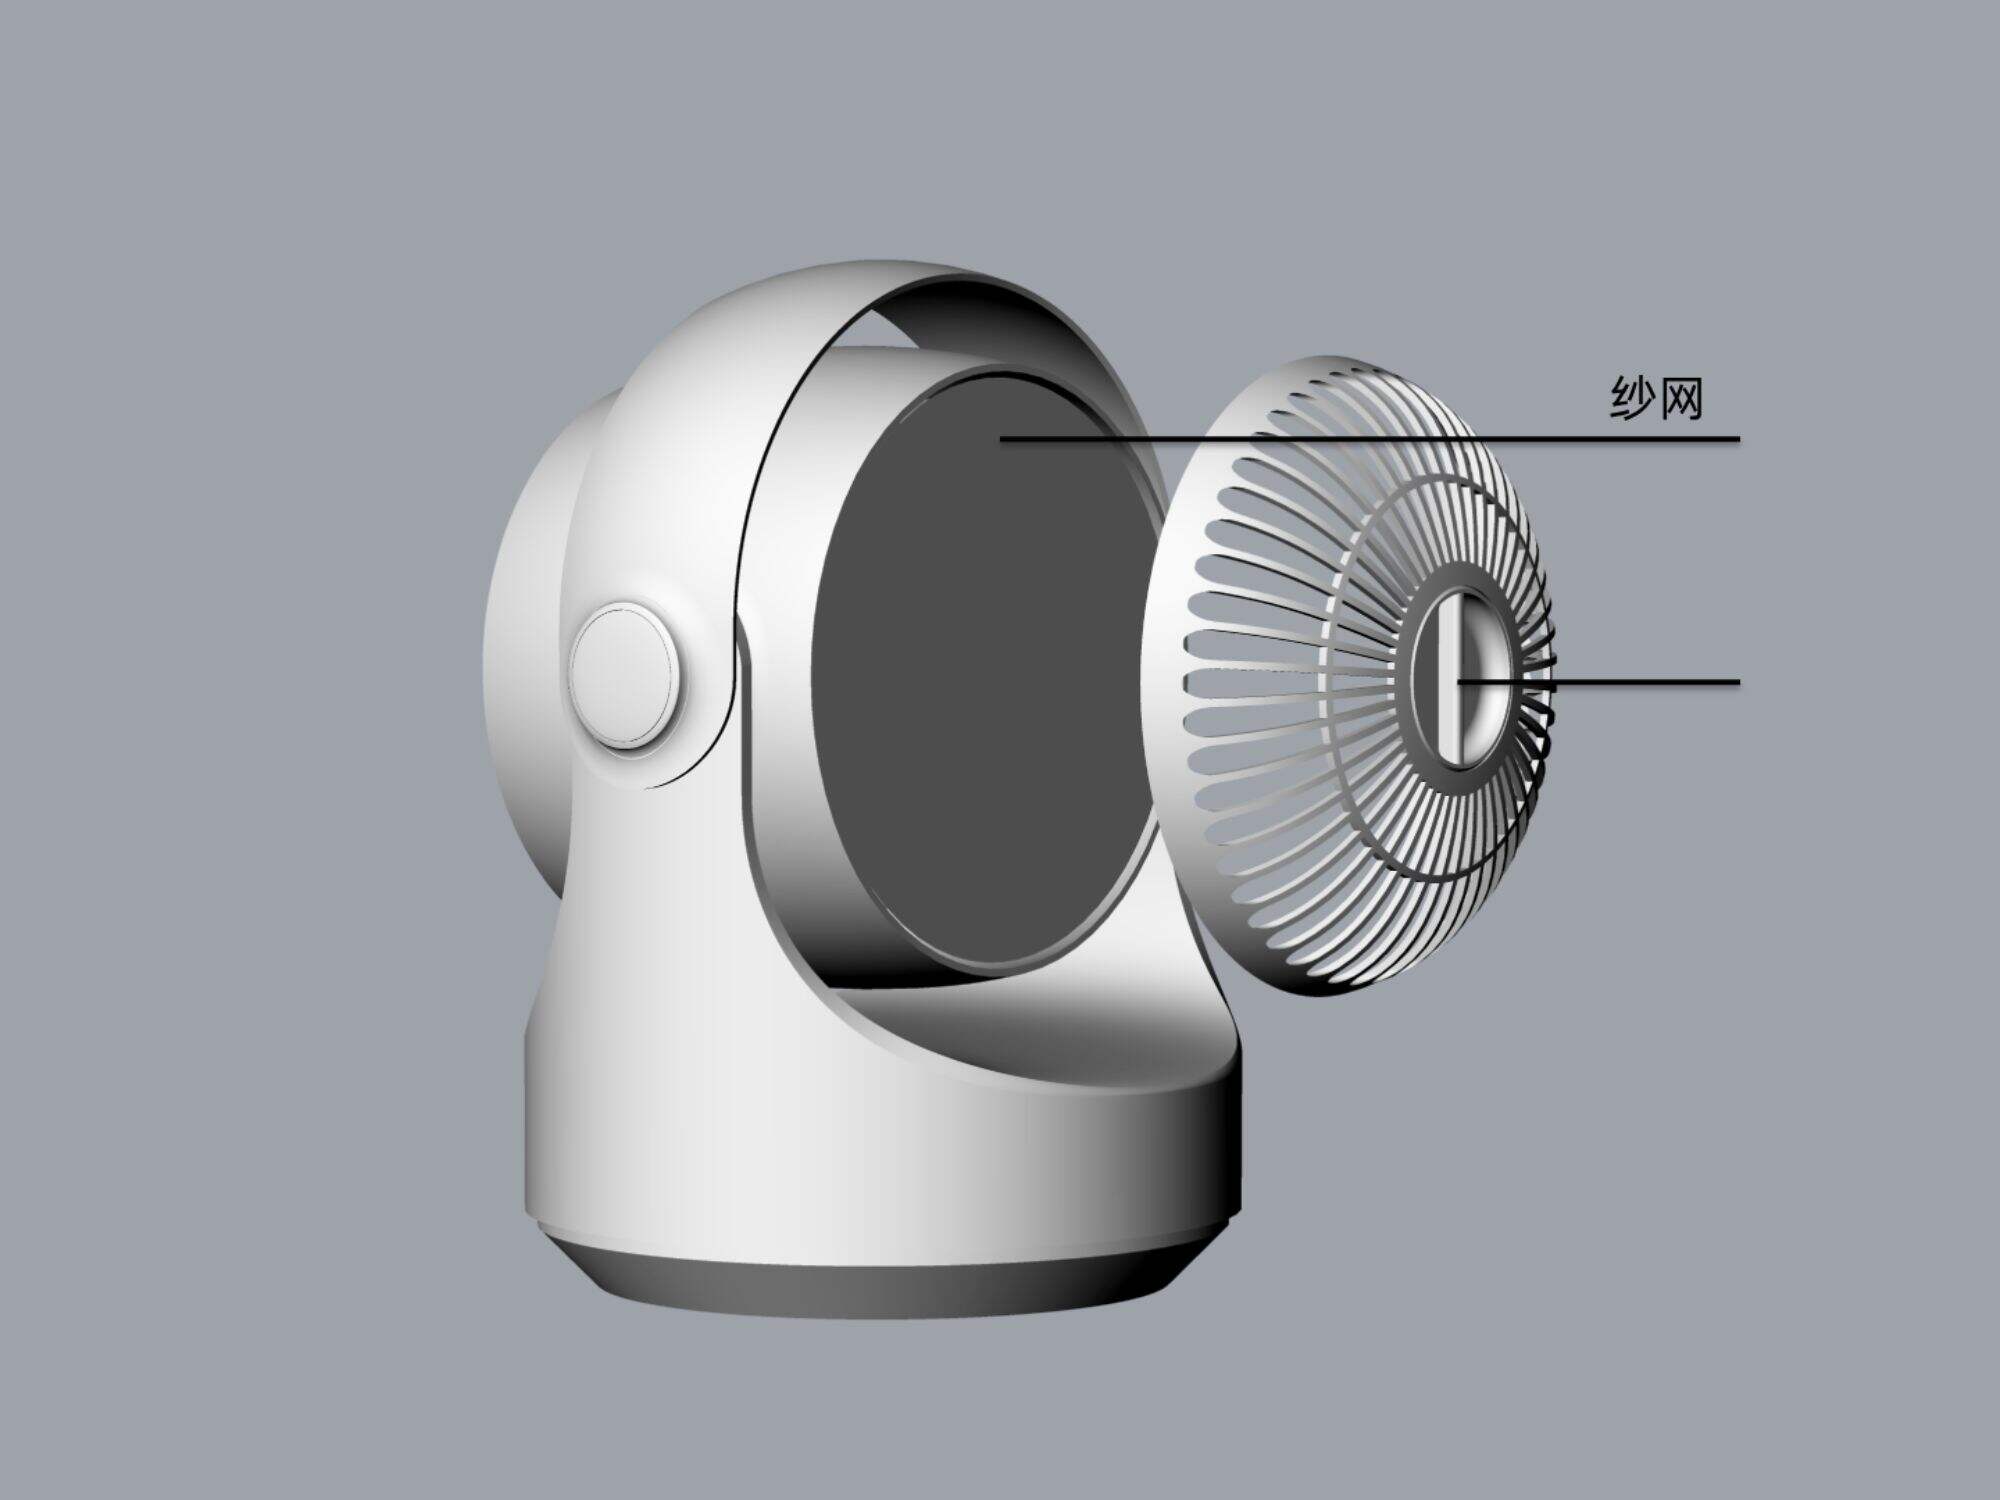 Desktop Nice-looking Air Circulator Fan with Aromatherapy